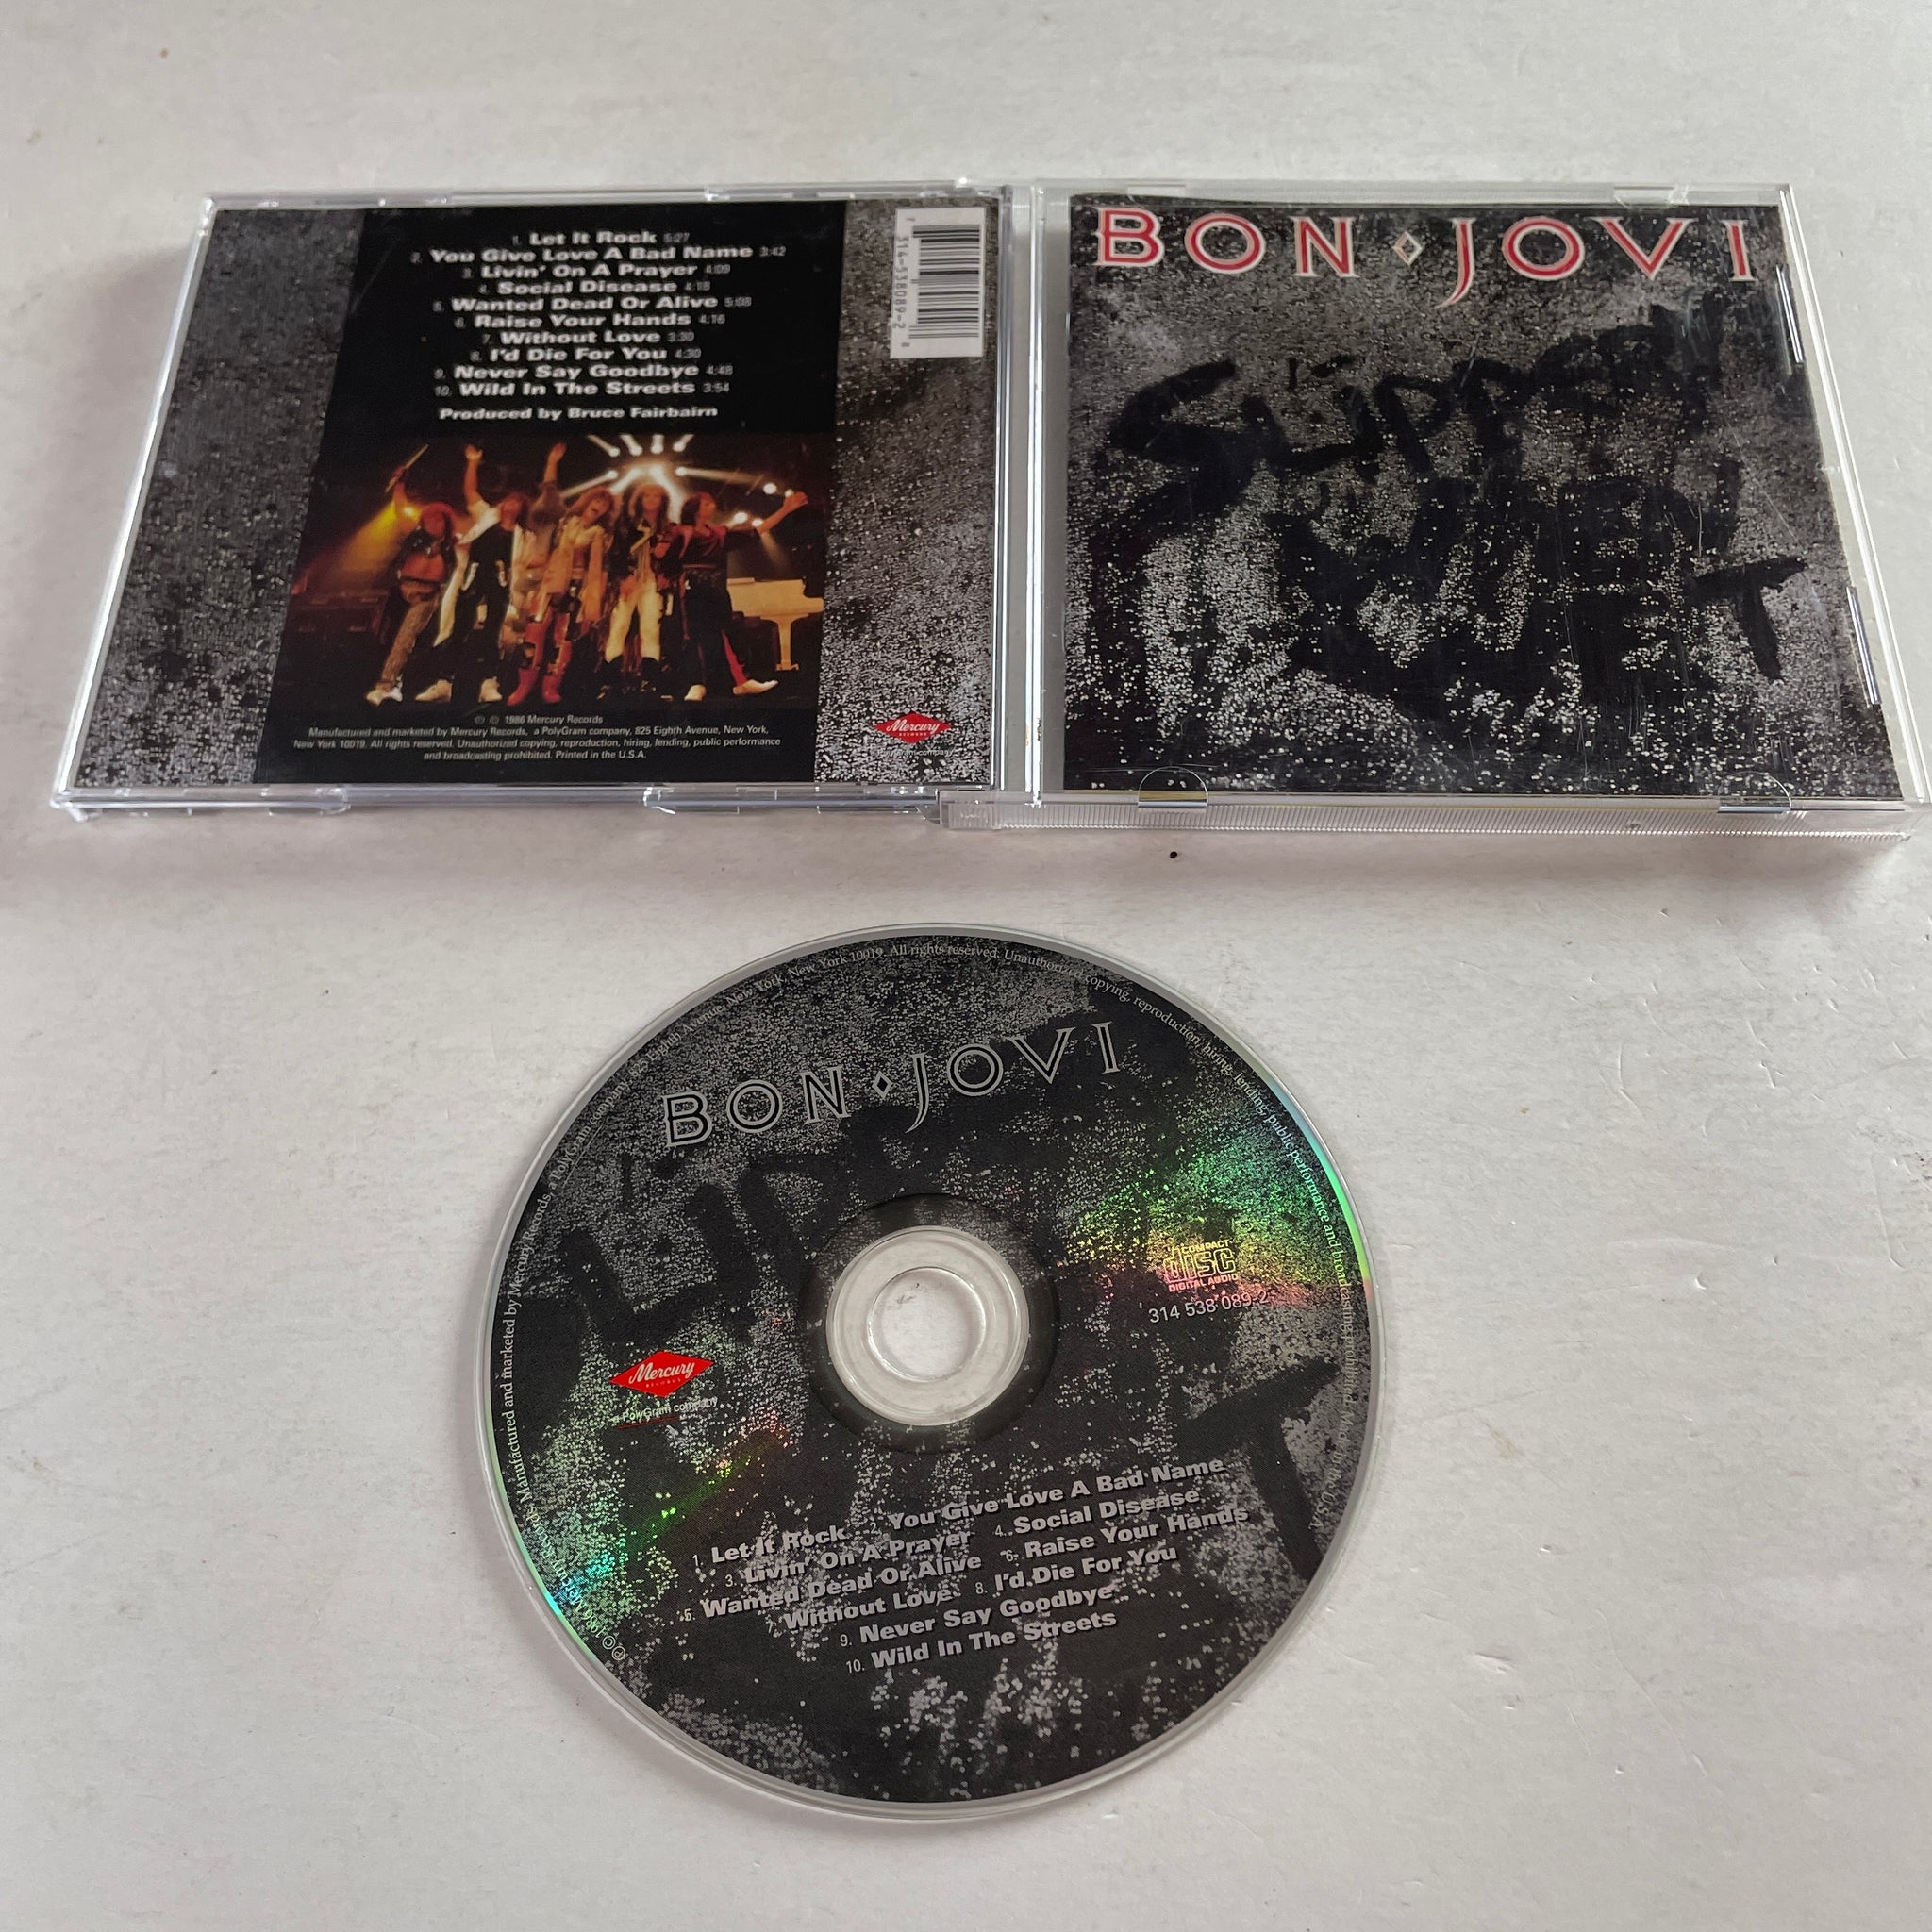  Bon Jovi [Remastered]: CDs & Vinyl